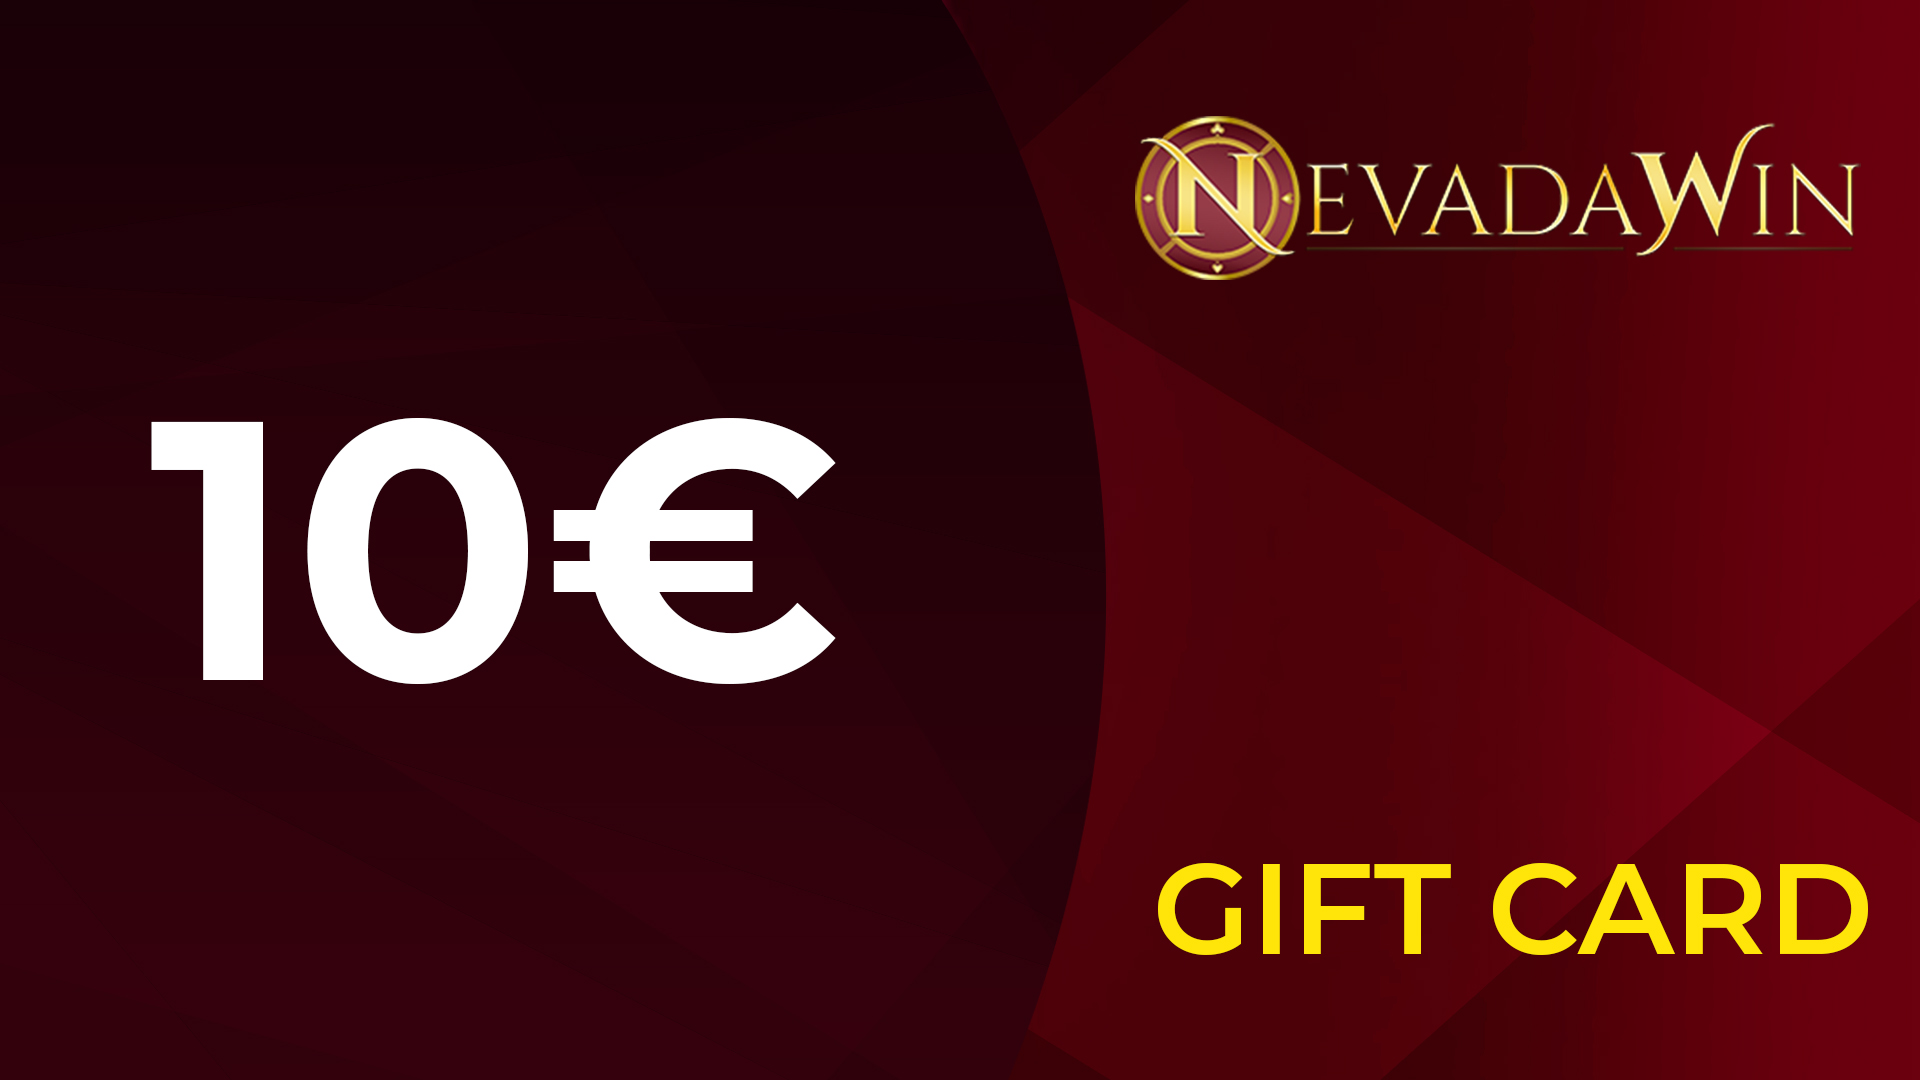 NevadaWin €10 Giftcard 10.99$